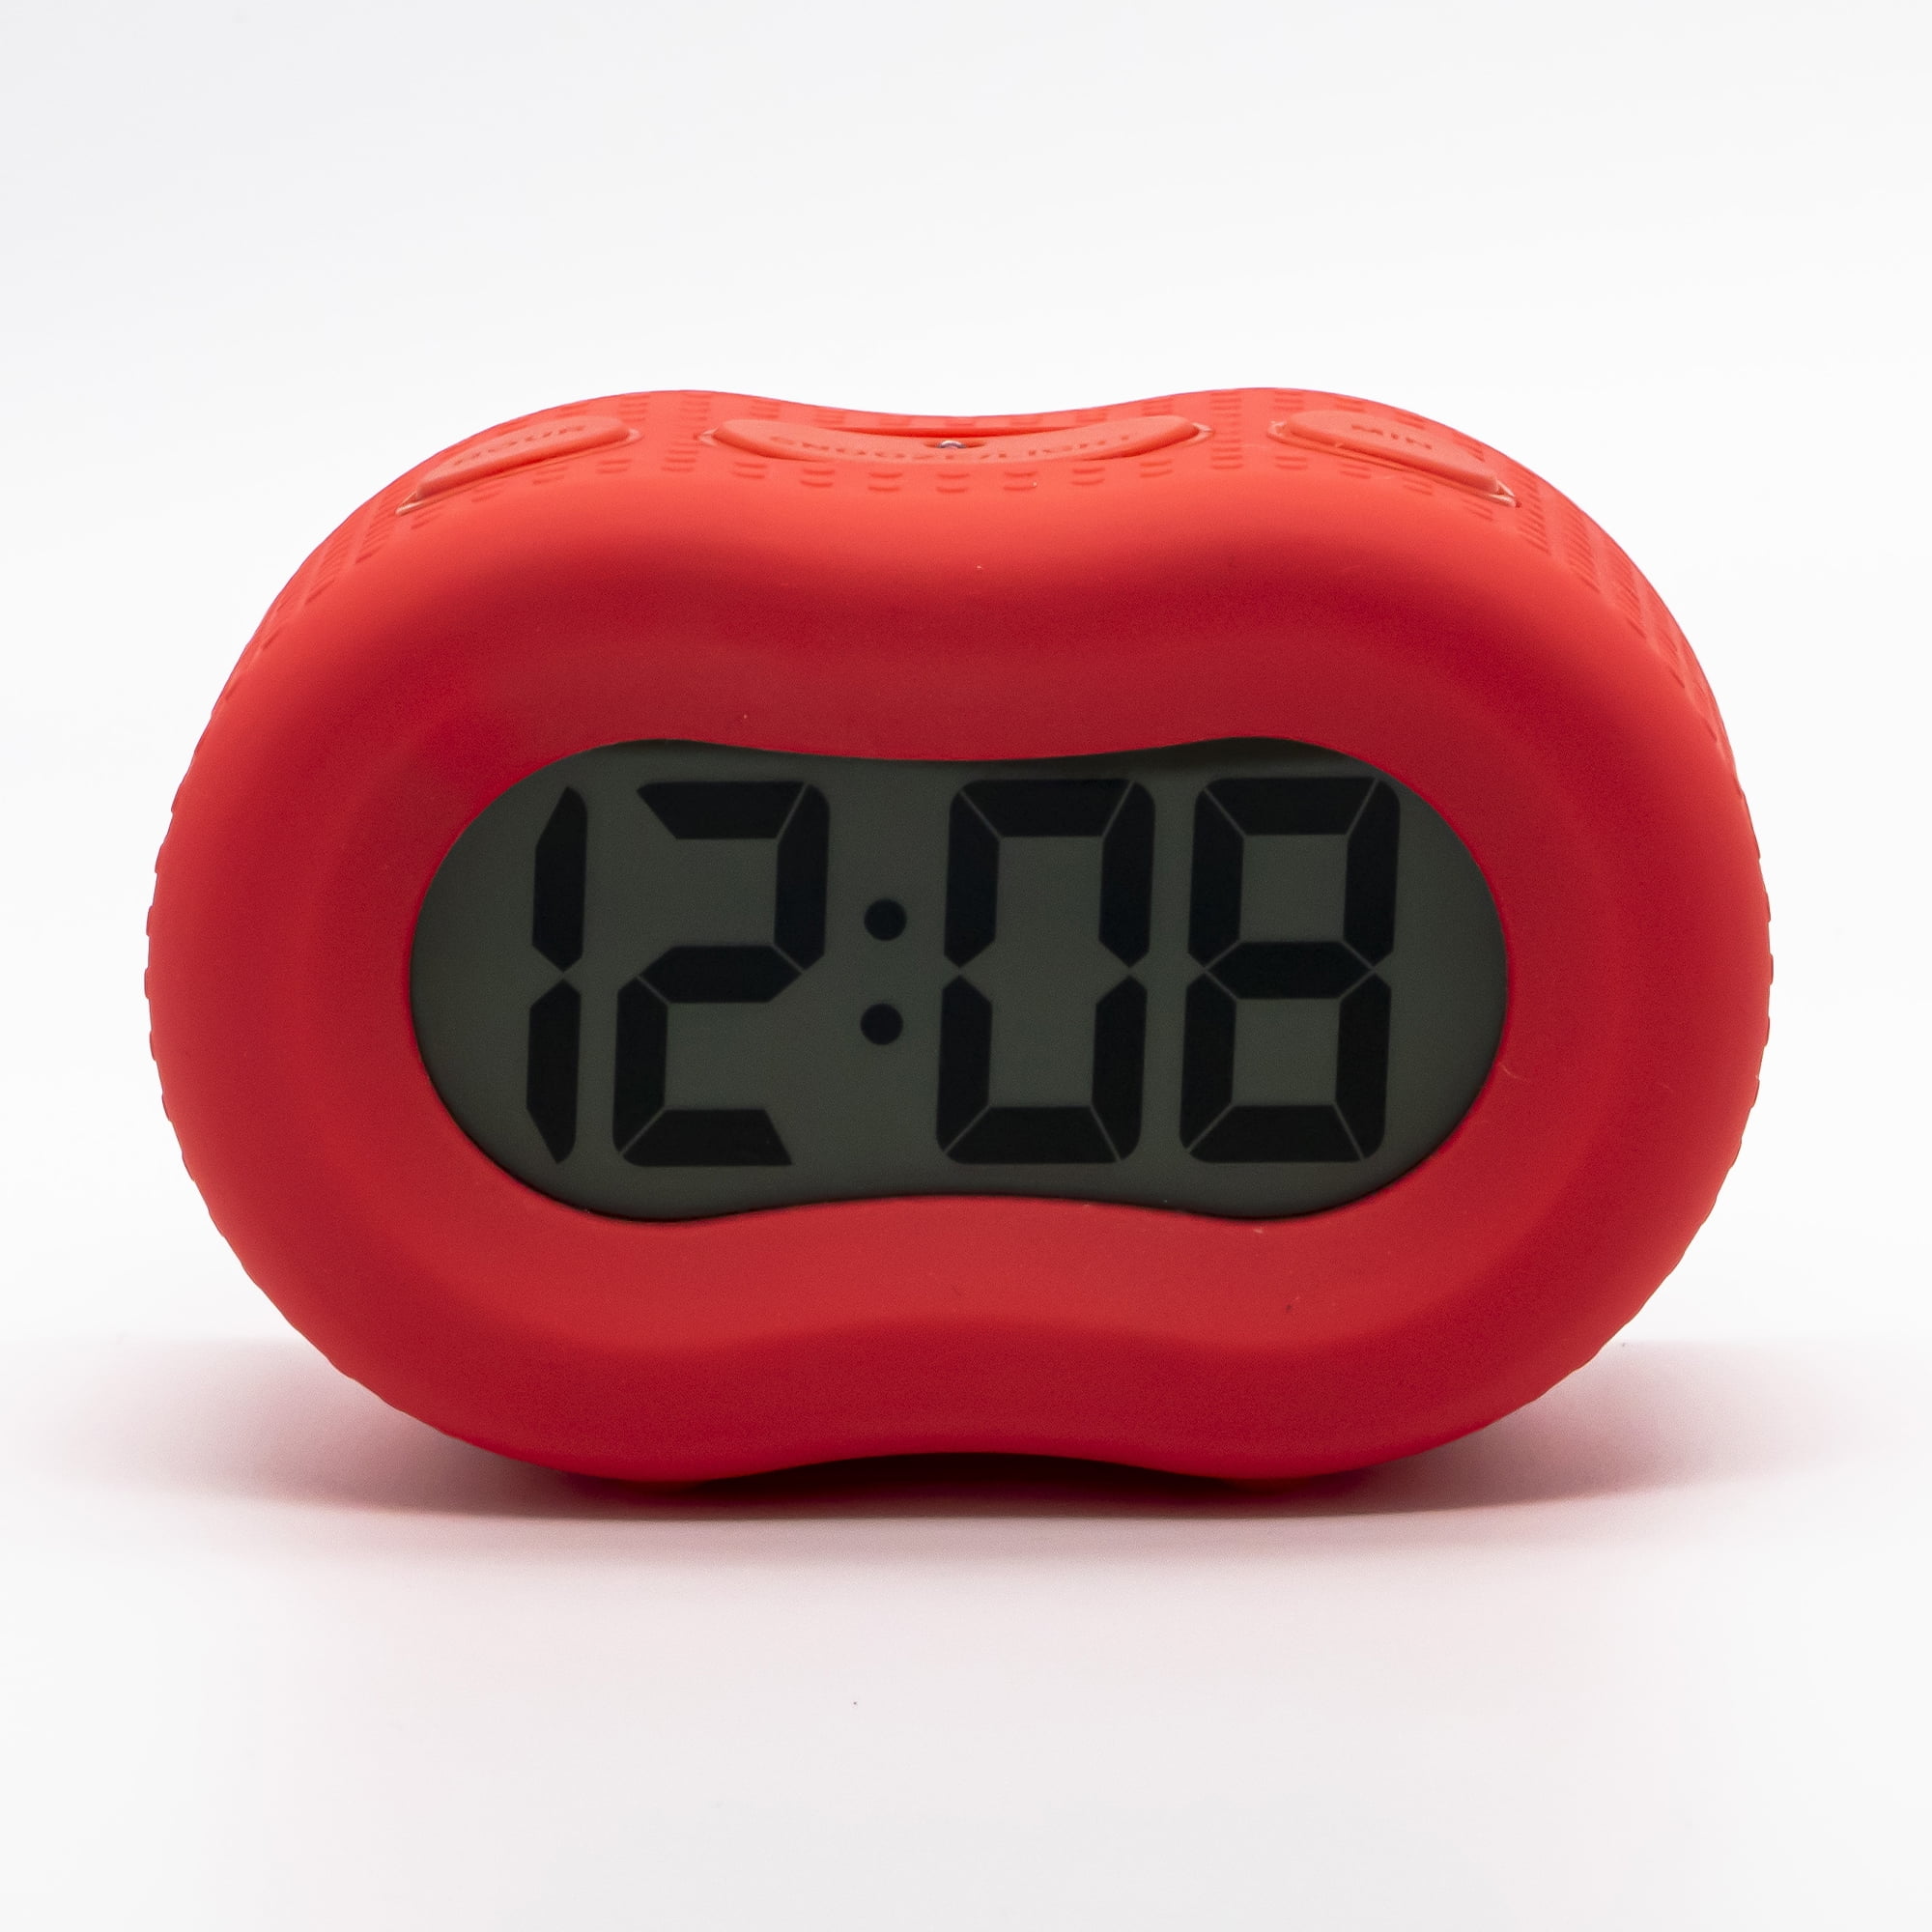 Timelink Rubber Smartlight Fashion Digital LCD Standard Alarm Clock - Red Walmart.com